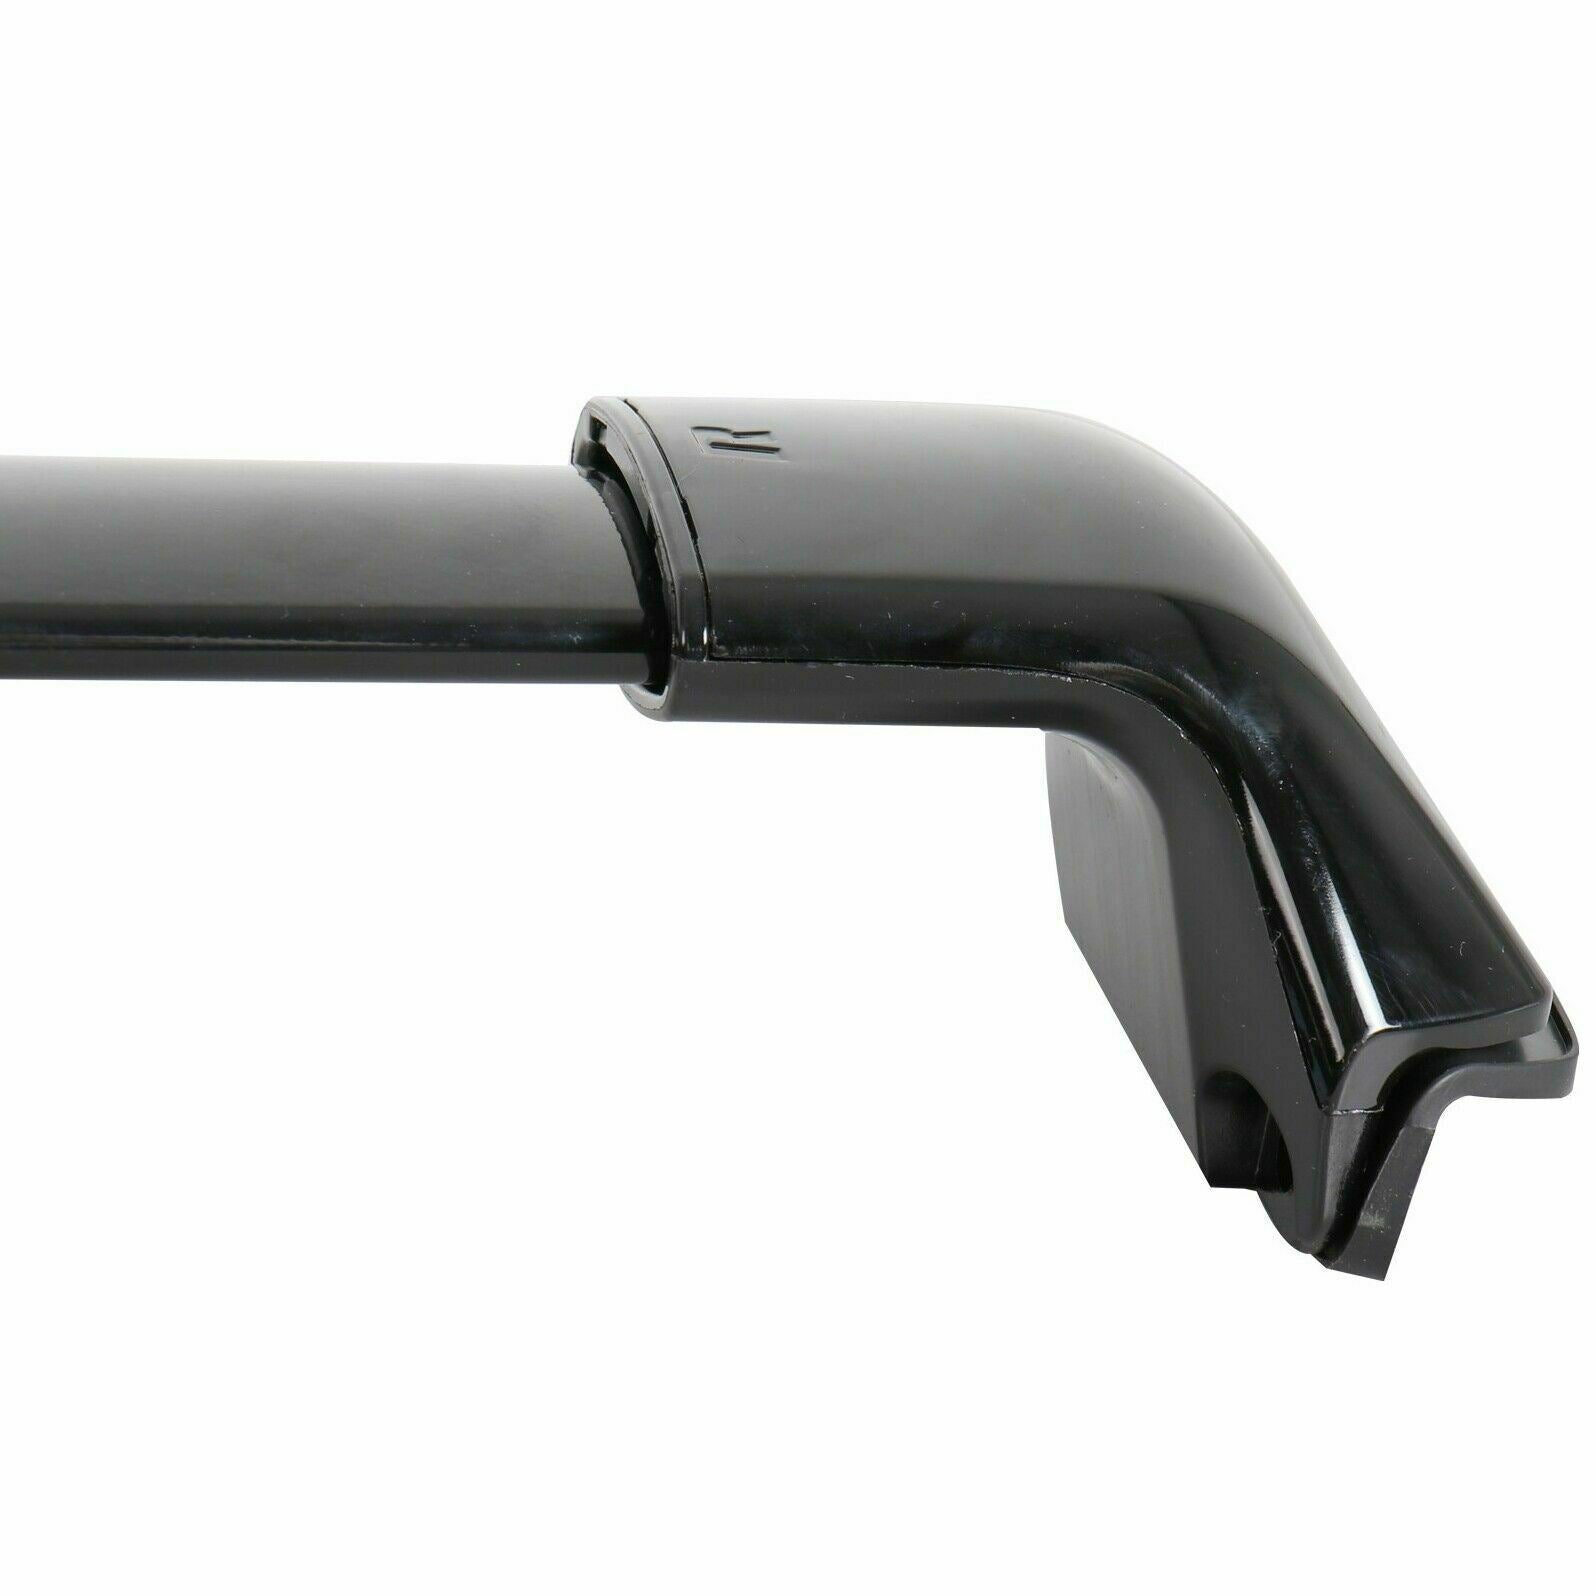 Ajuste 2012-2016 Honda CRV portaequipajes de techo barra transversal barra de montaje negro perno de aluminio